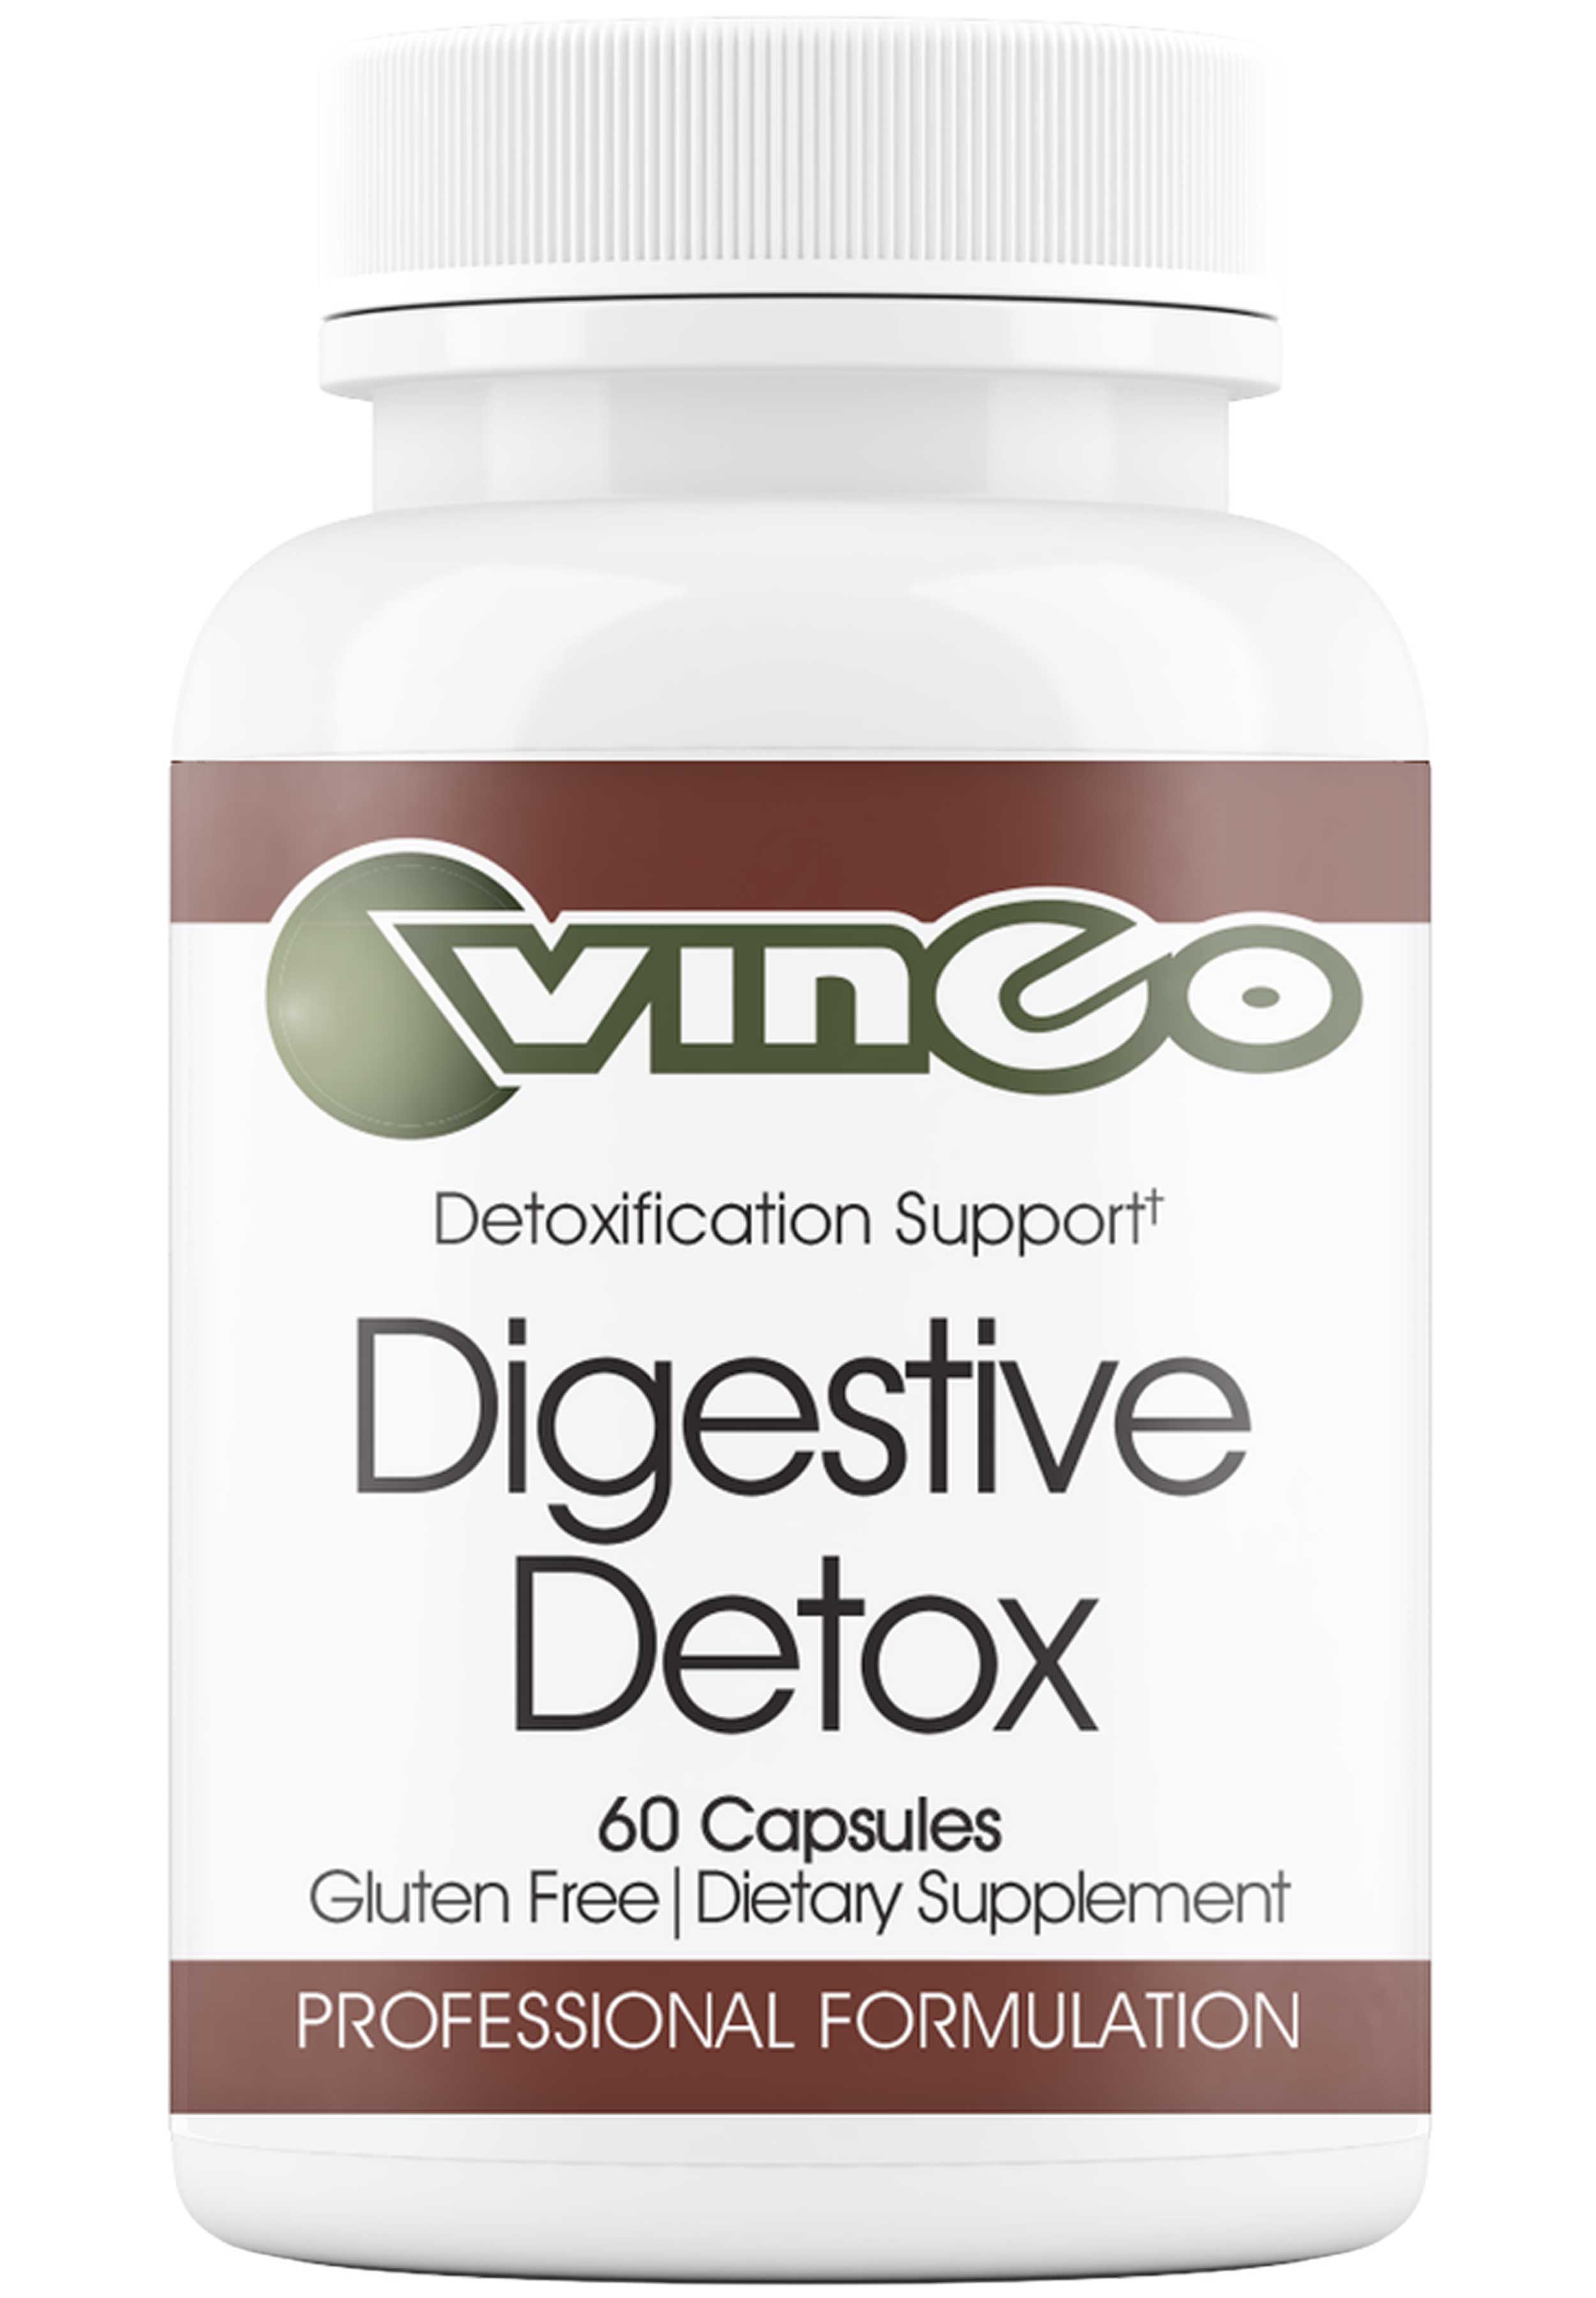 Vinco Digestive Detox